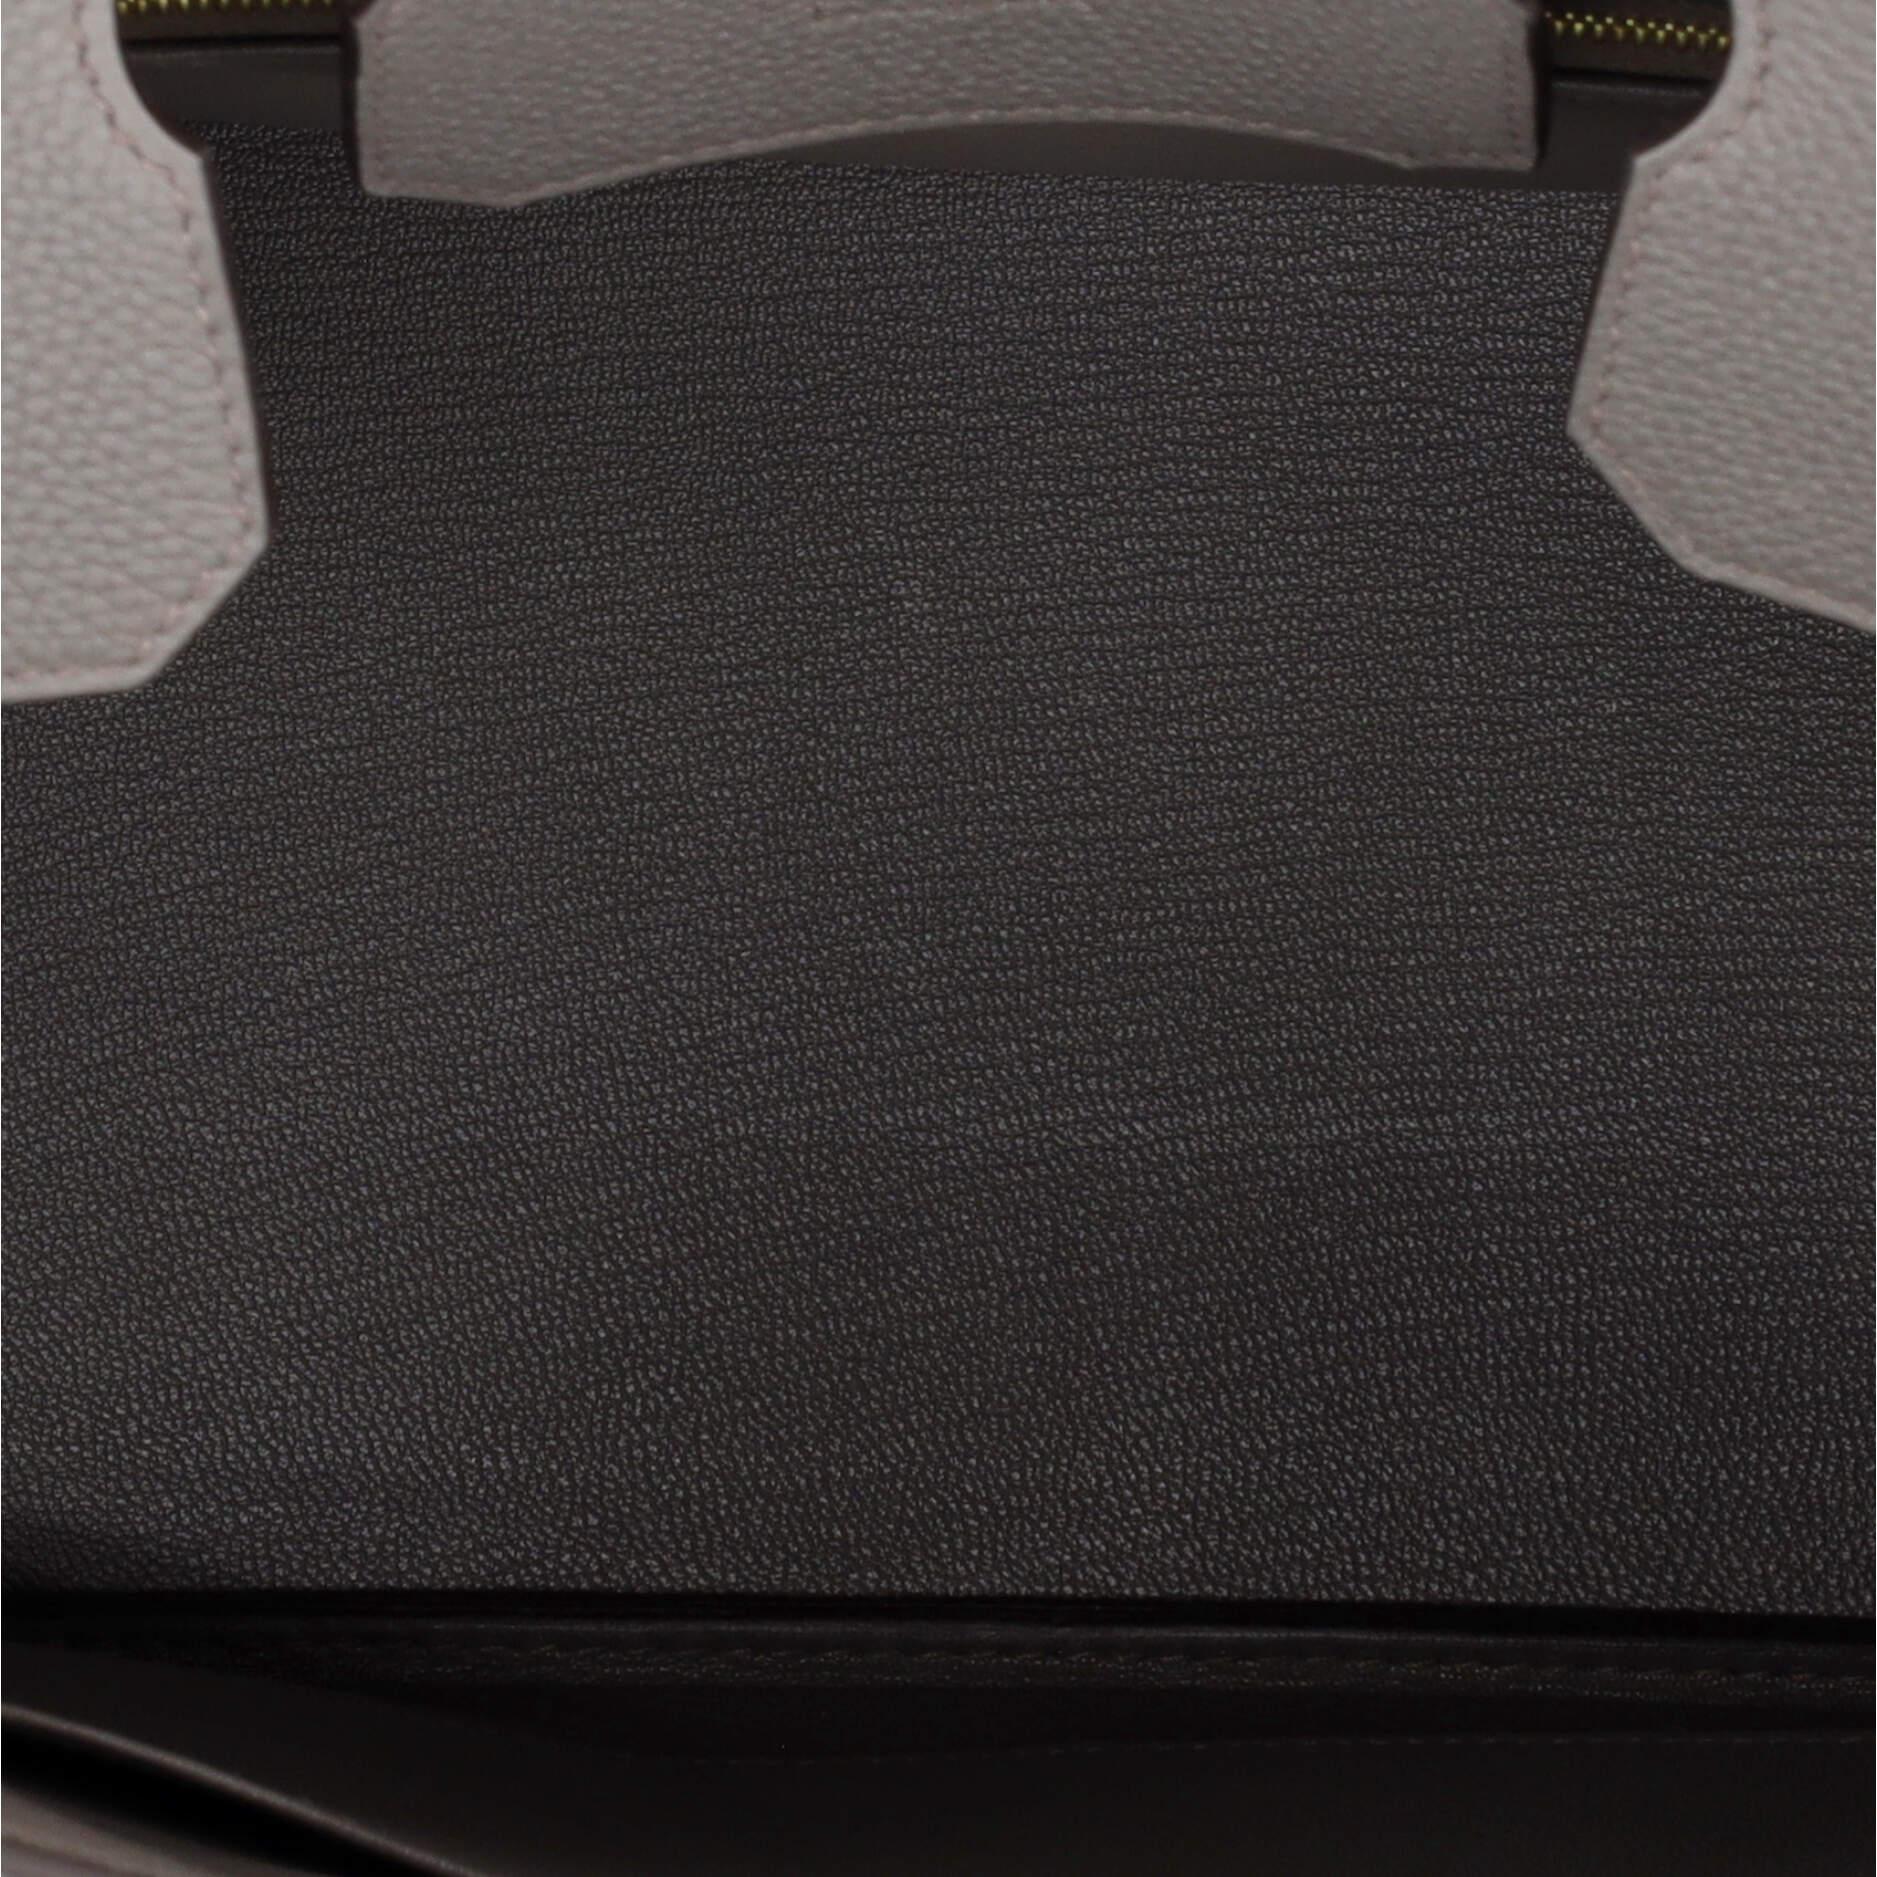 Hermes Birkin Handbag Grey Togo with Rose Gold Hardware 30 2